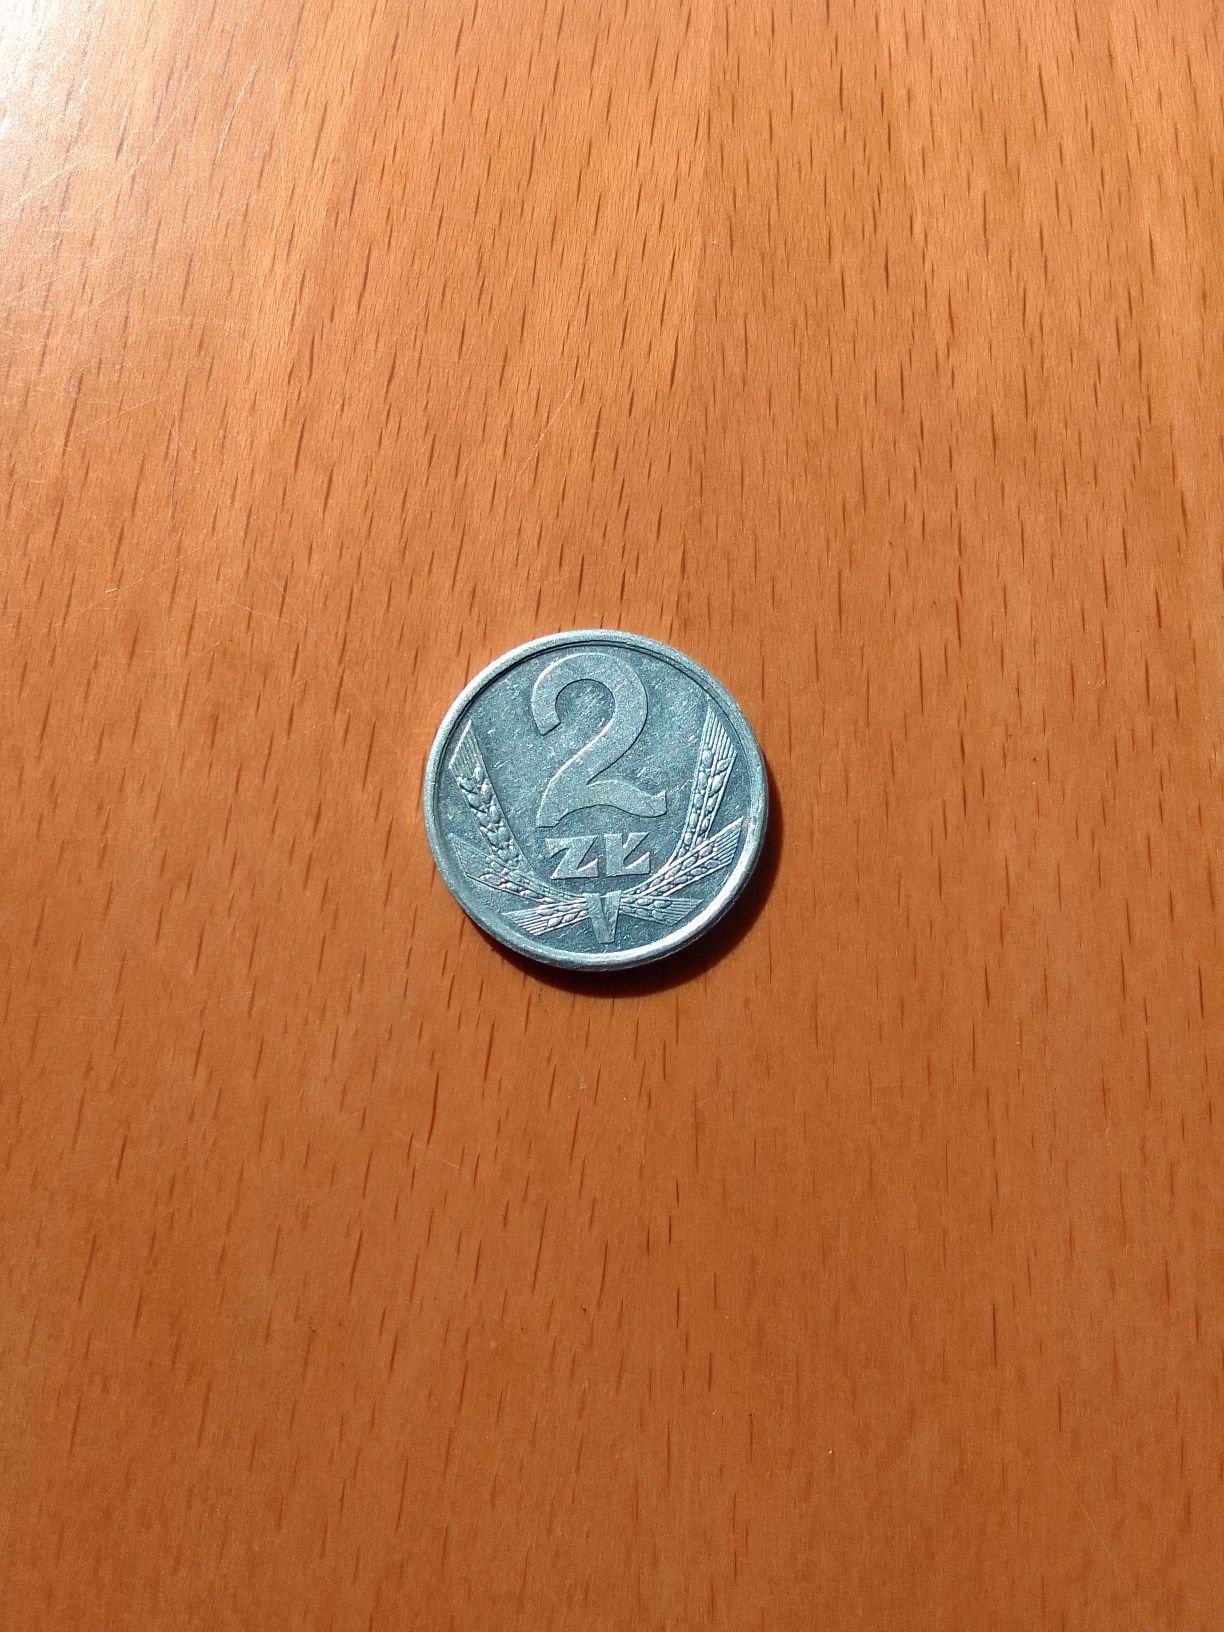 Moneta 2zł z 1989r